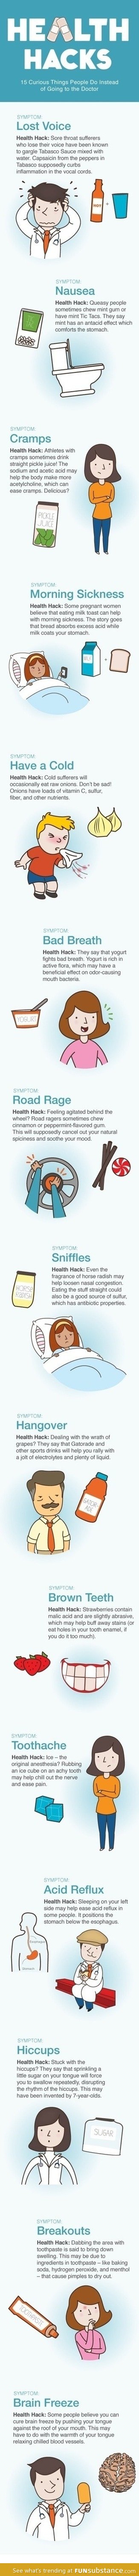 Useful health hacks